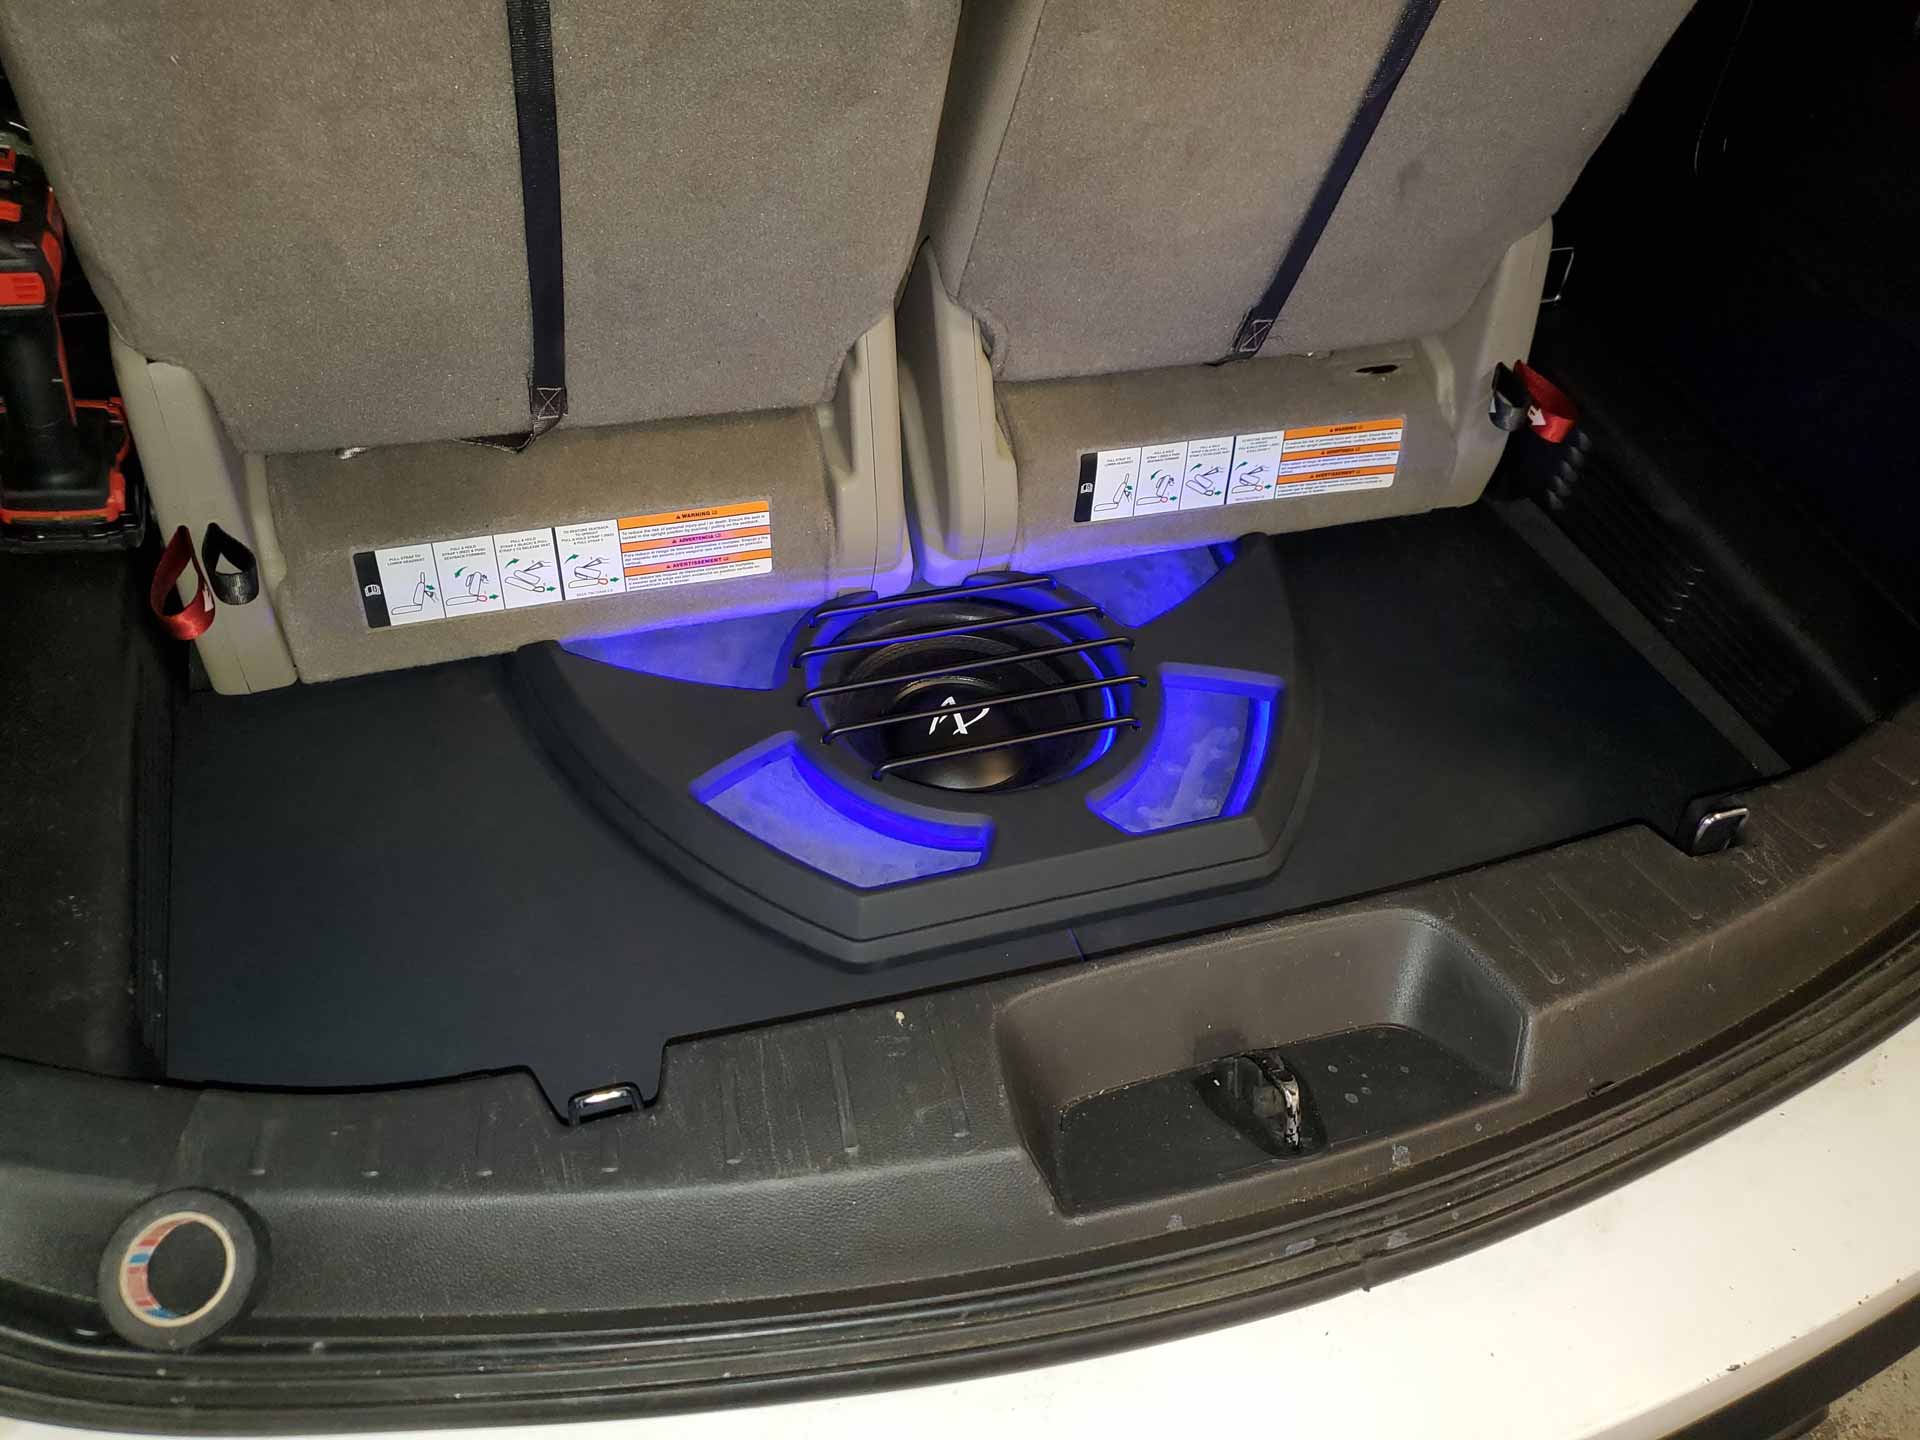 New speaker installed in trunk of car